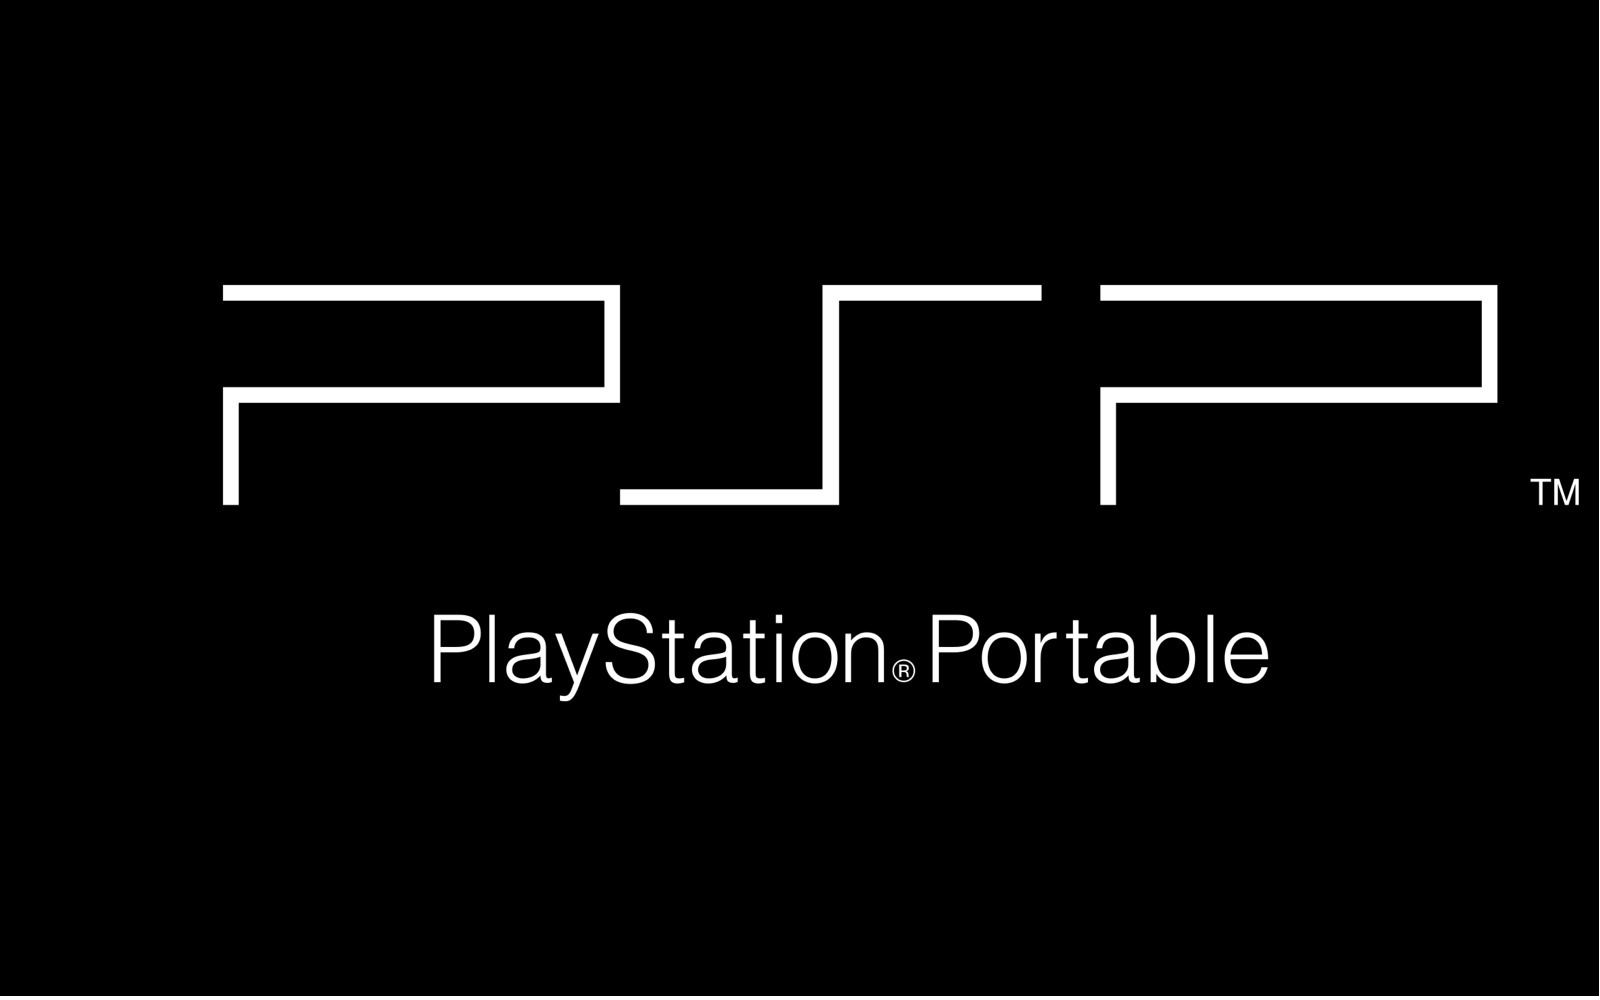 Psp Logo Wallpaperwallpaper Playstation Nature Portable Awesome